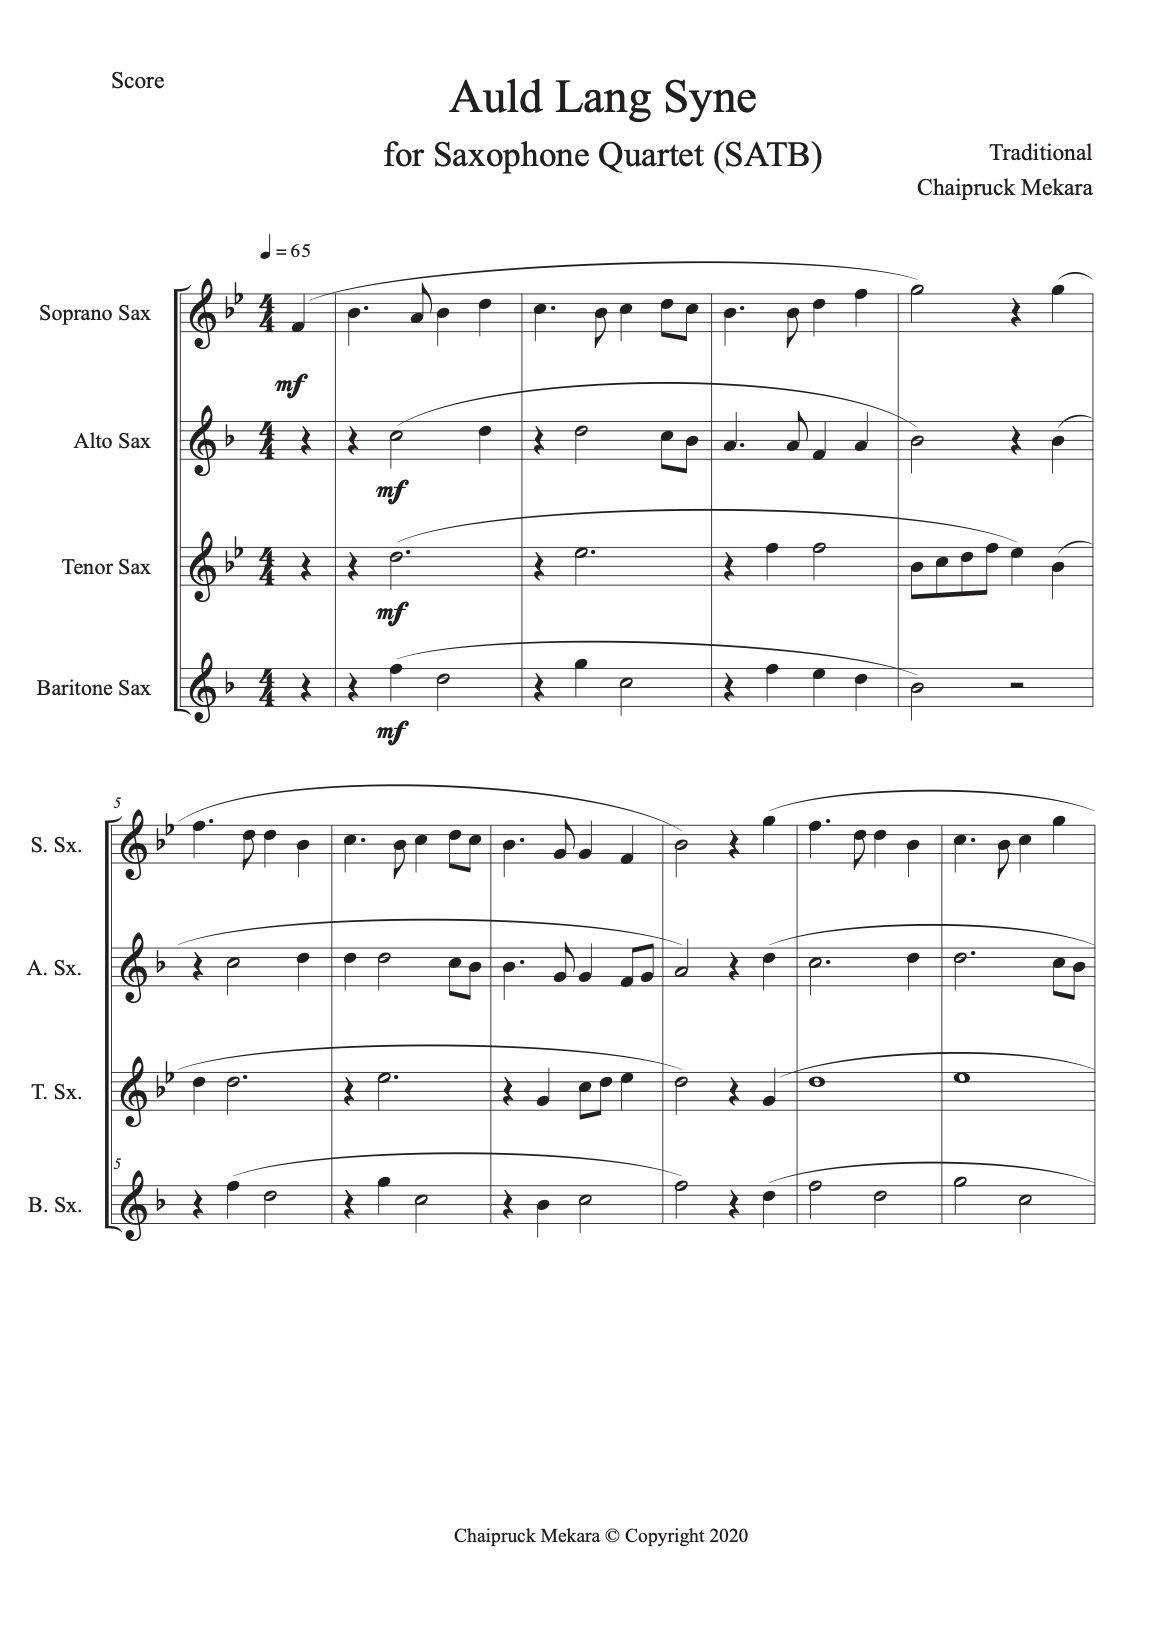 Saxophone Quartet sheet music (SATB): Auld Lang Syne - ChaipruckMekara